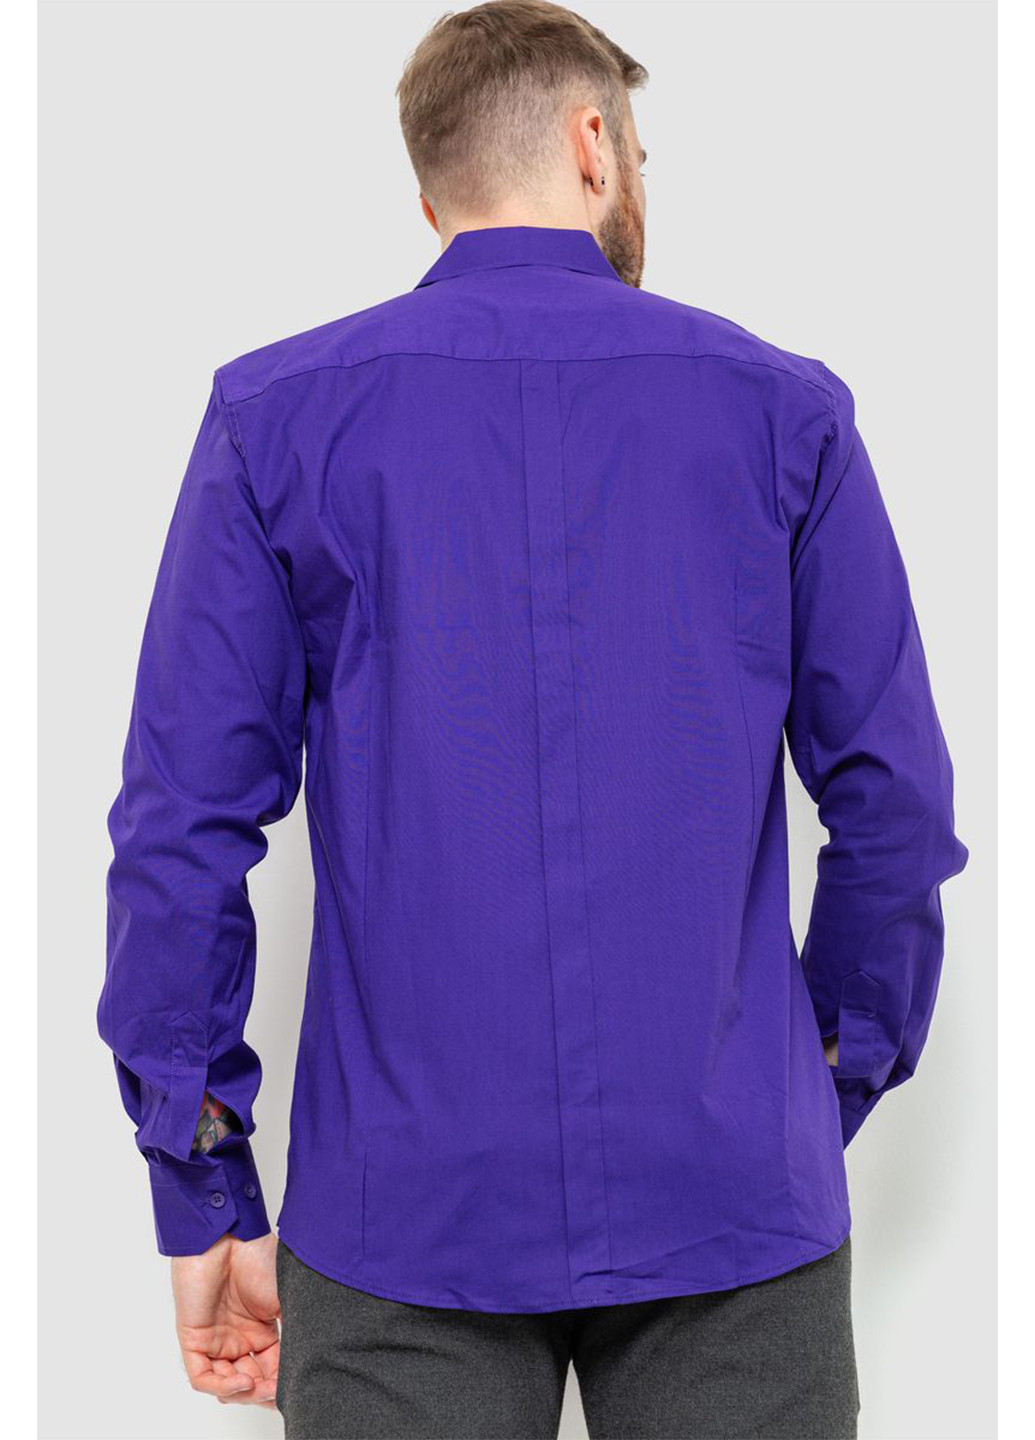 Фиолетовая кэжуал рубашка однотонная Ager